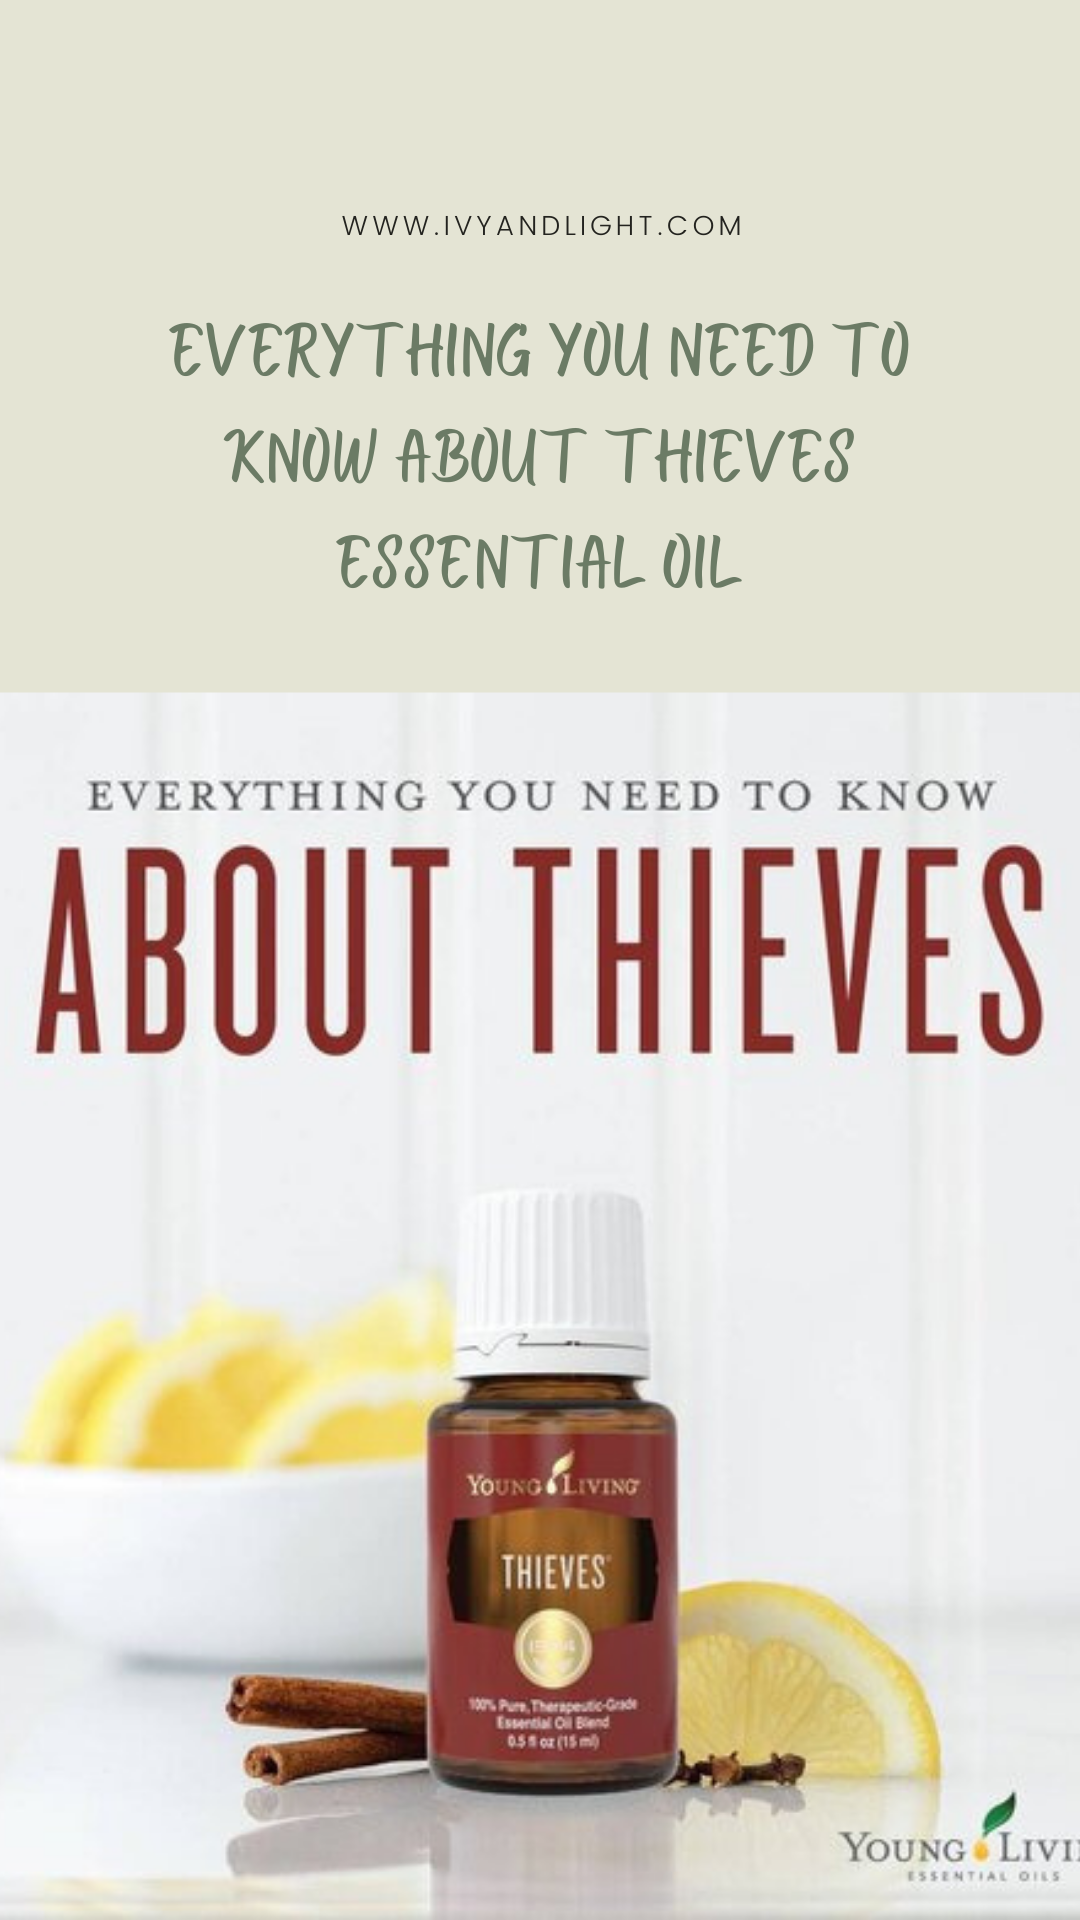 Thieves Essential Oil